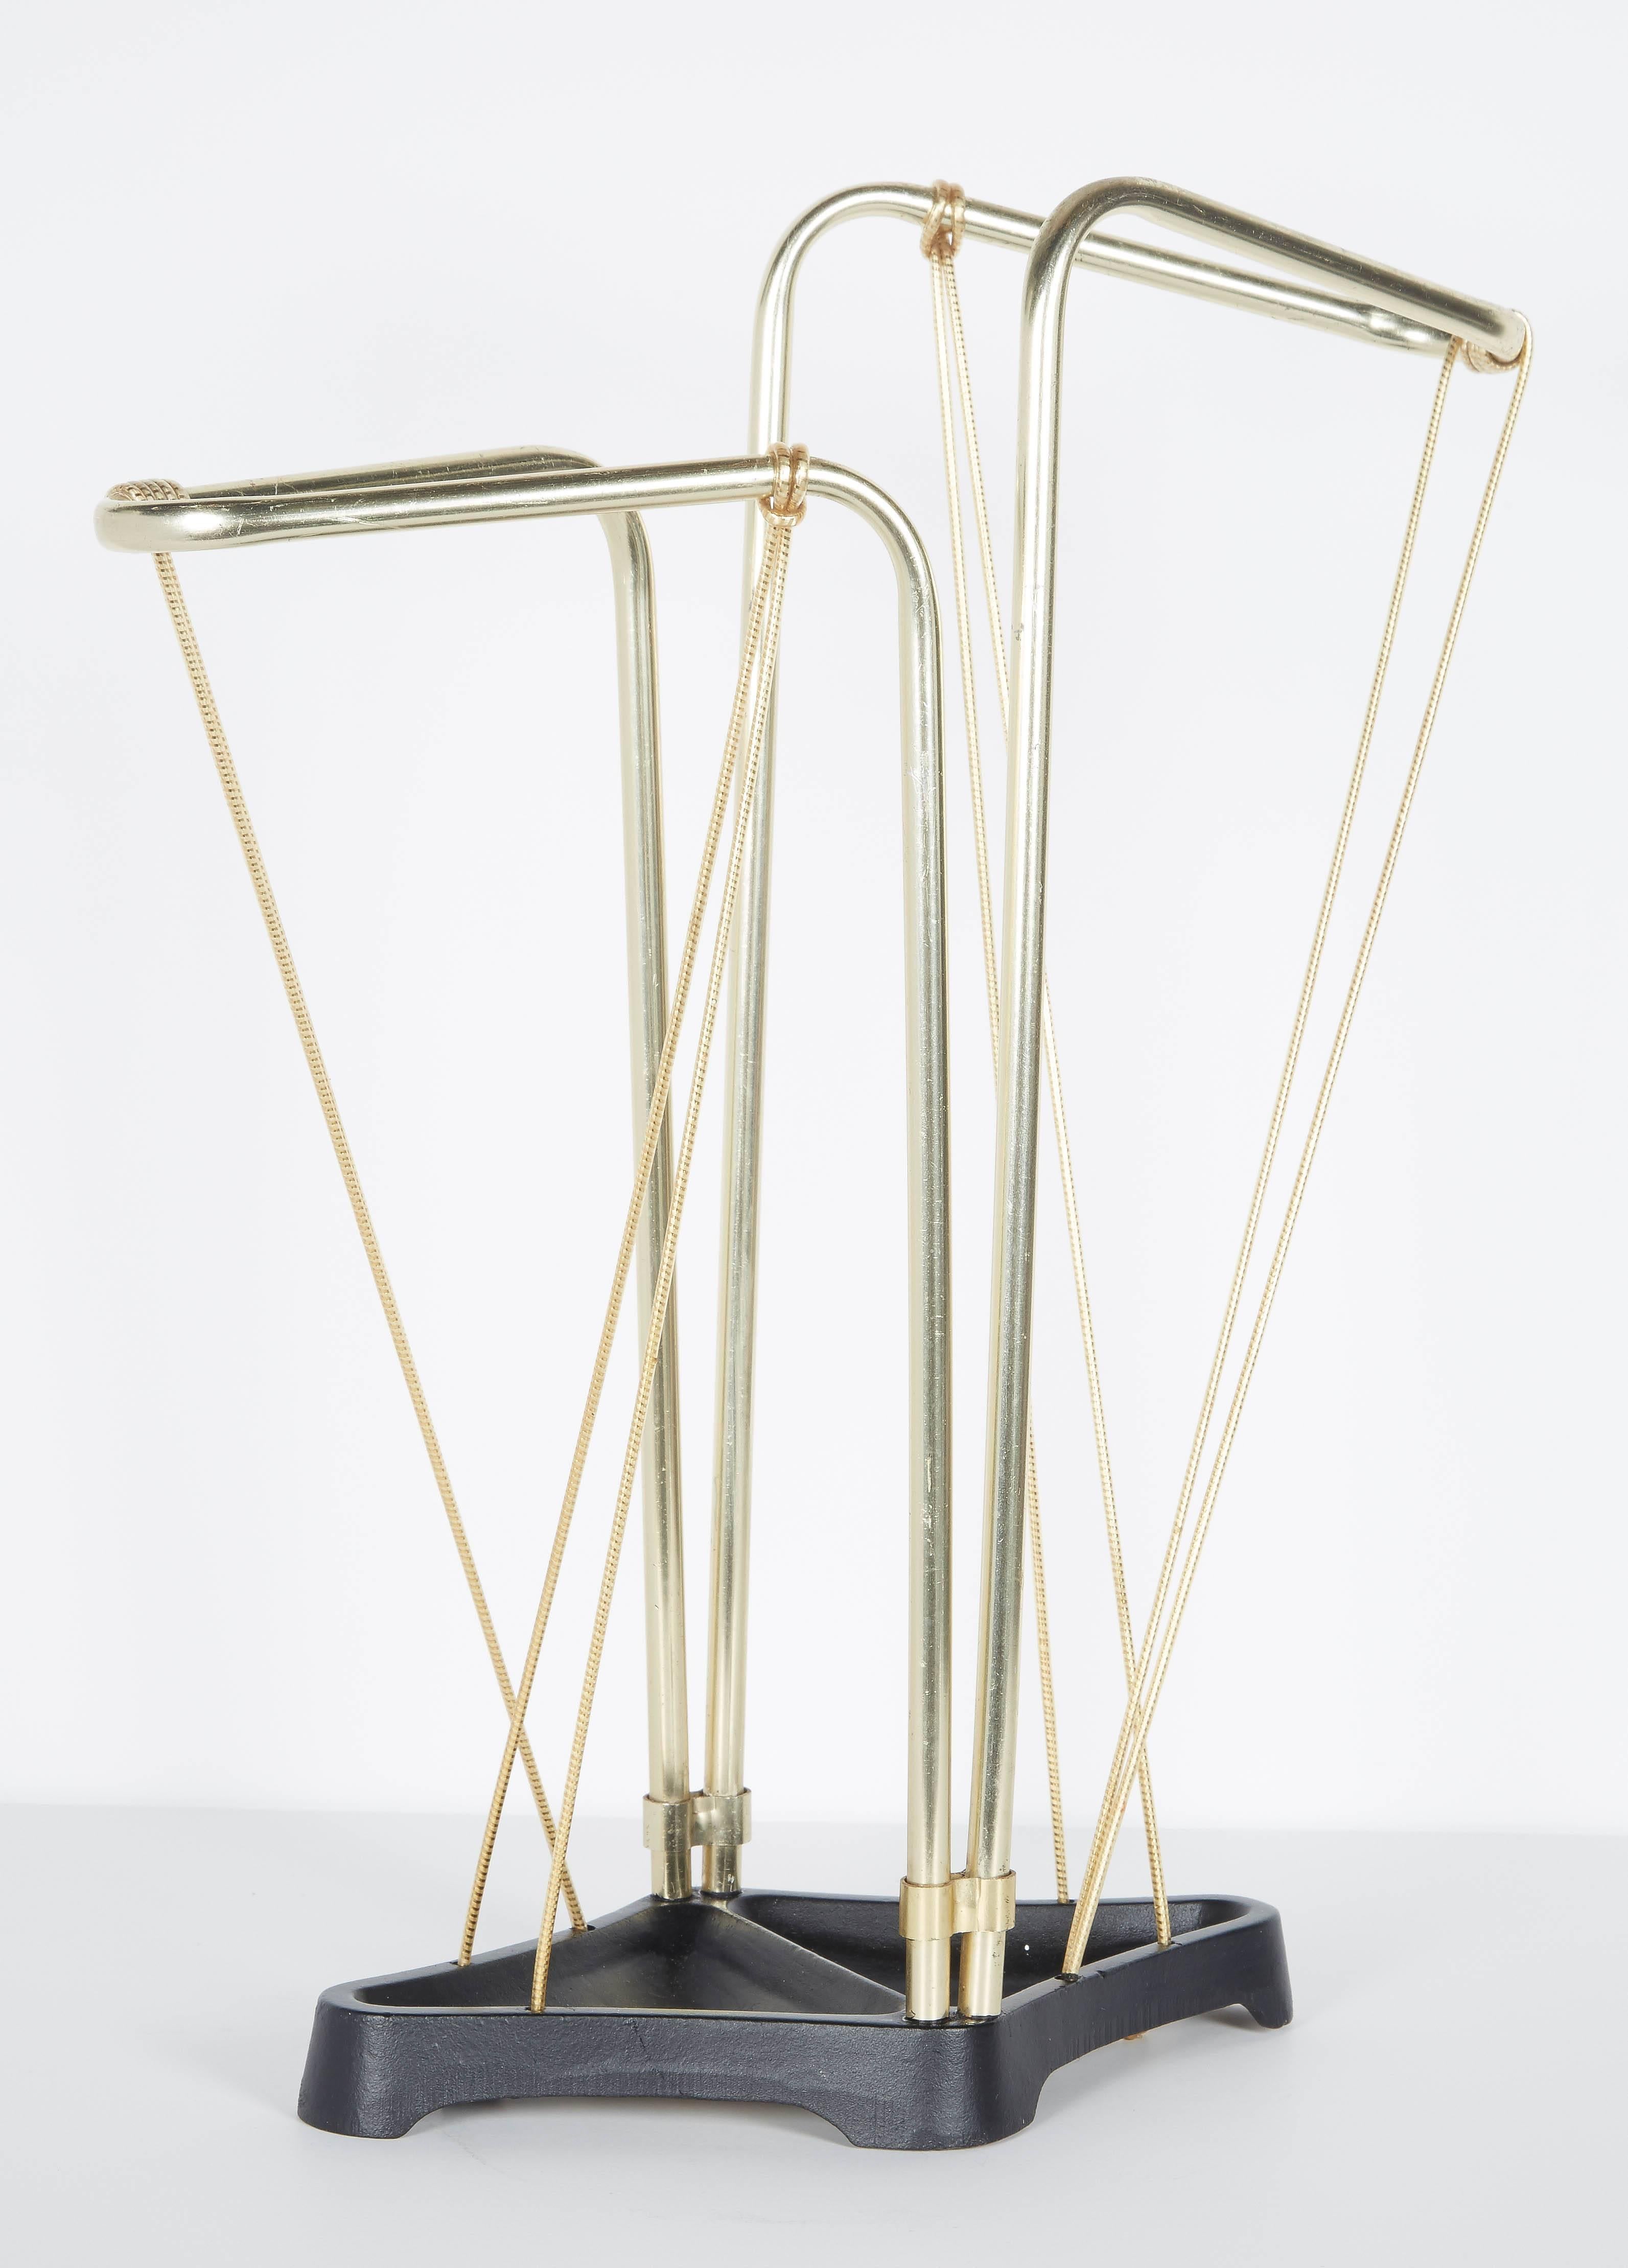 Mid-20th Century Austrian Mid-Century Modern Umbrella Stand with Asymmetrical Form